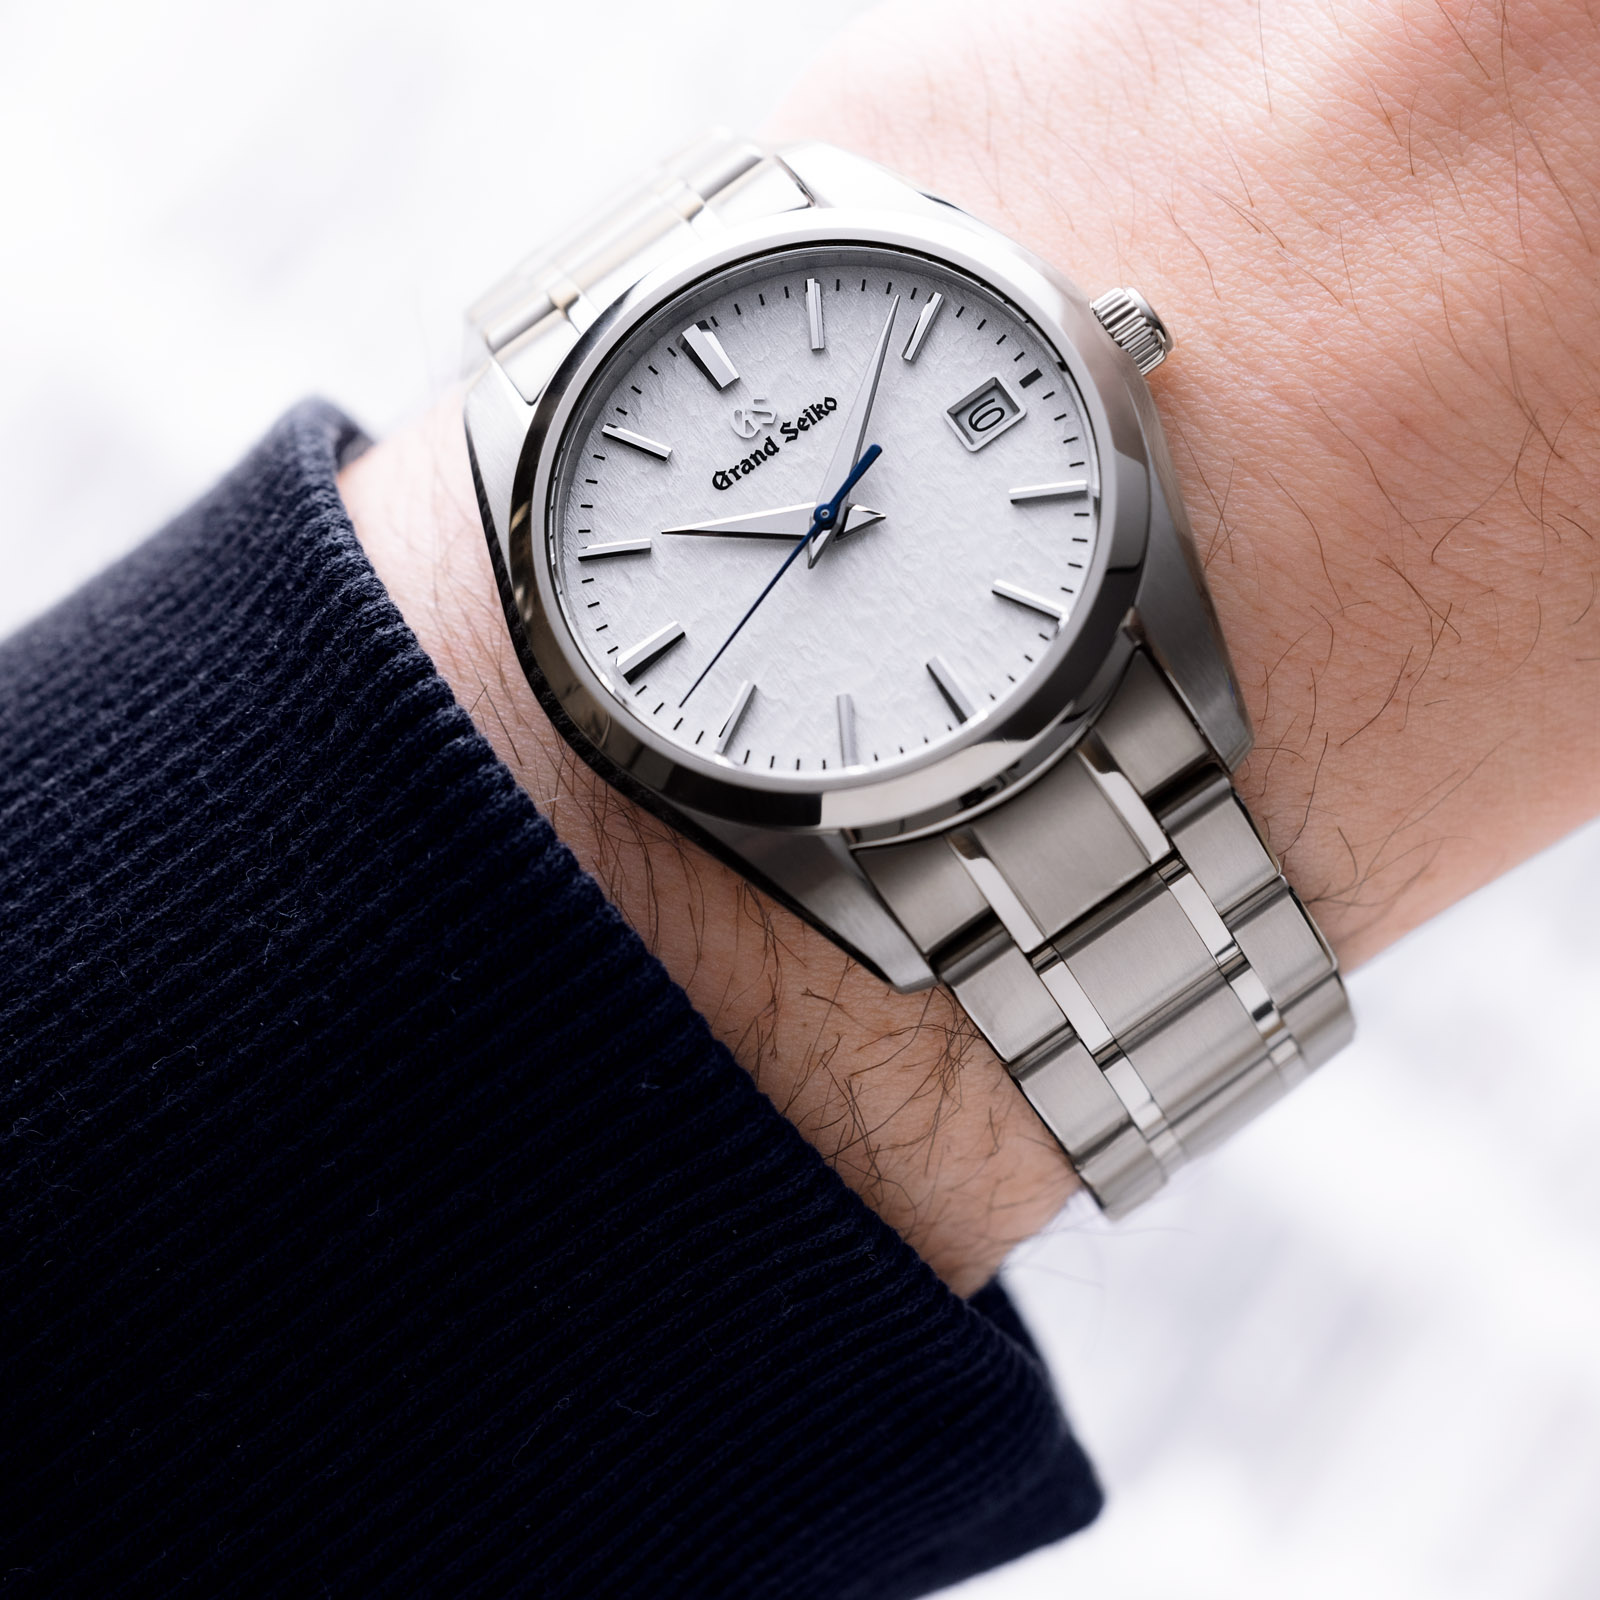 Grand Seiko Snowflake dial 37mm watch on the wrist. 